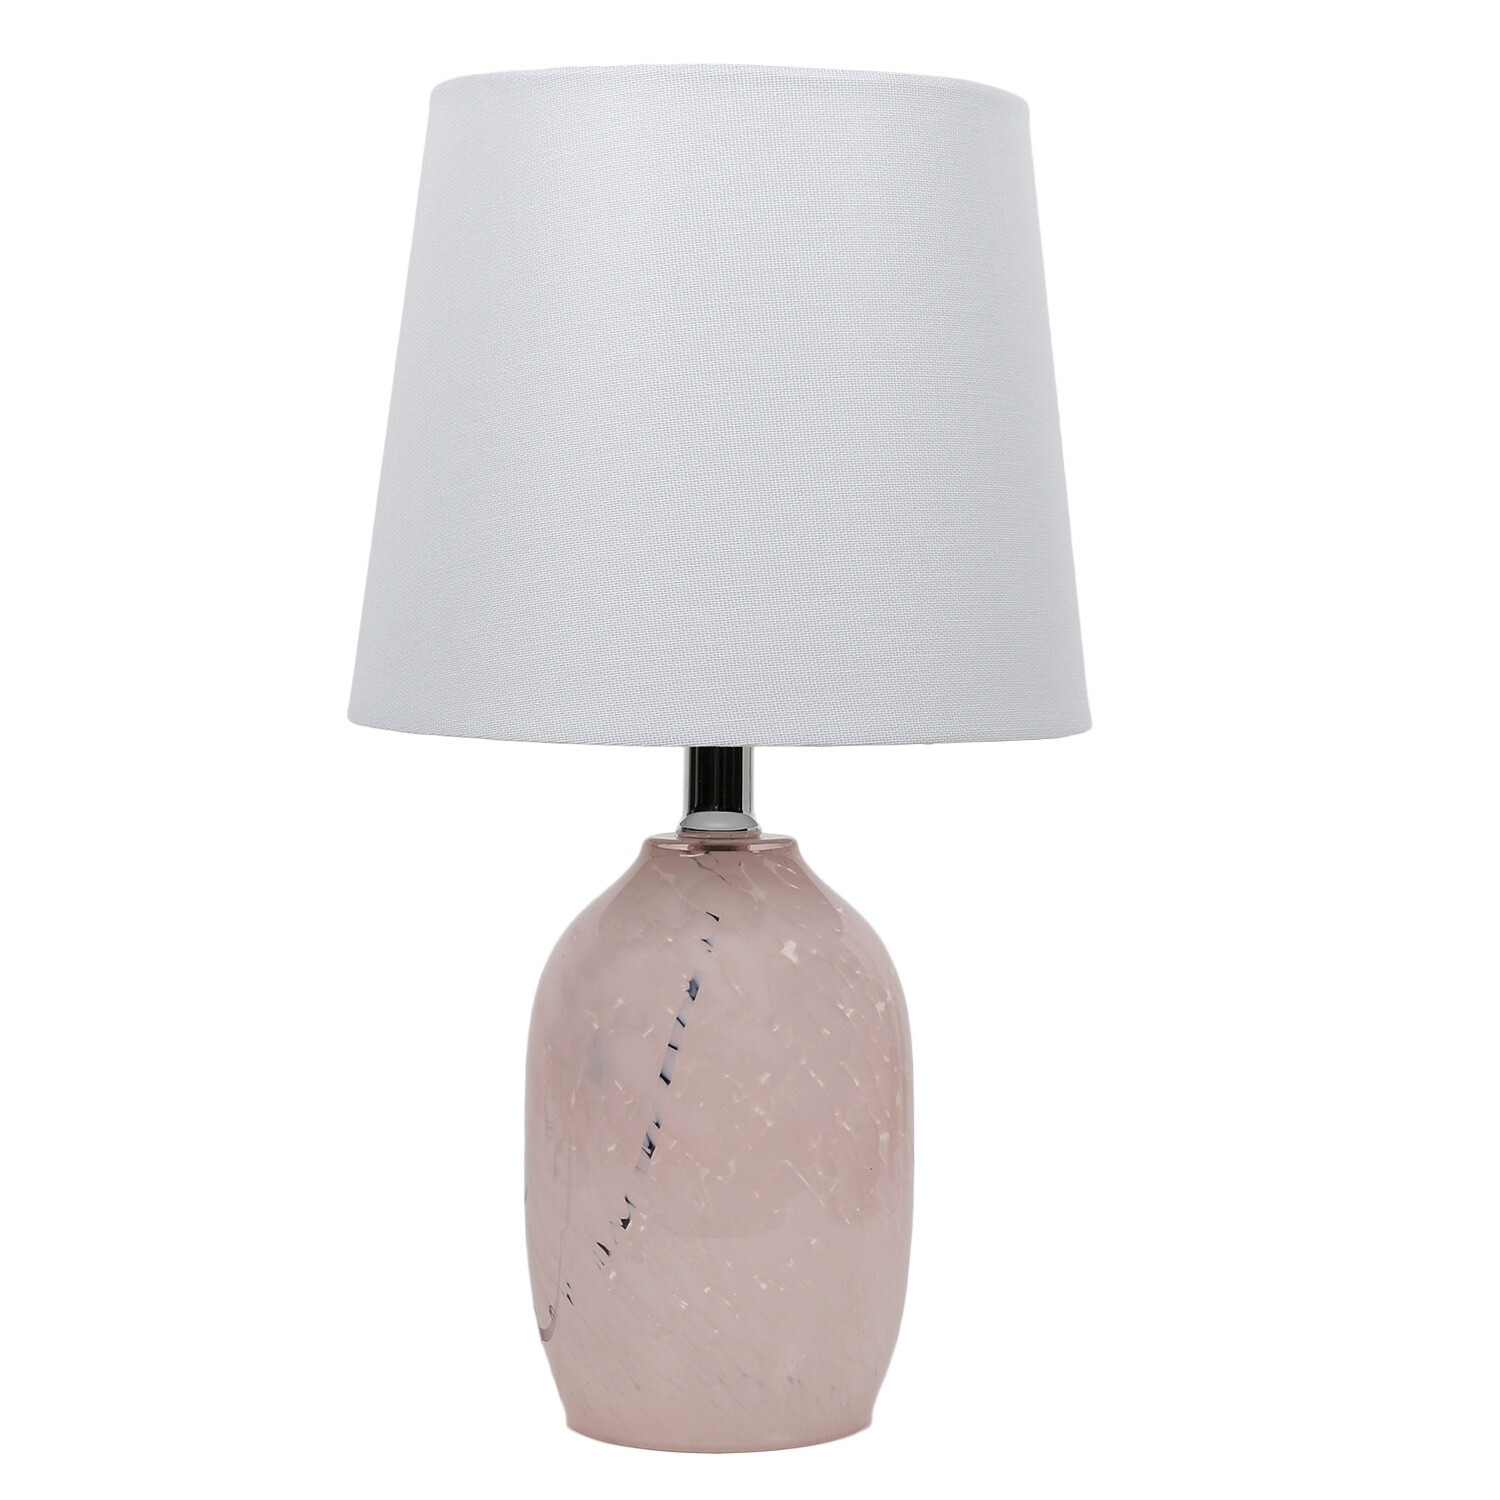 Alessia Table Lamp Image 1